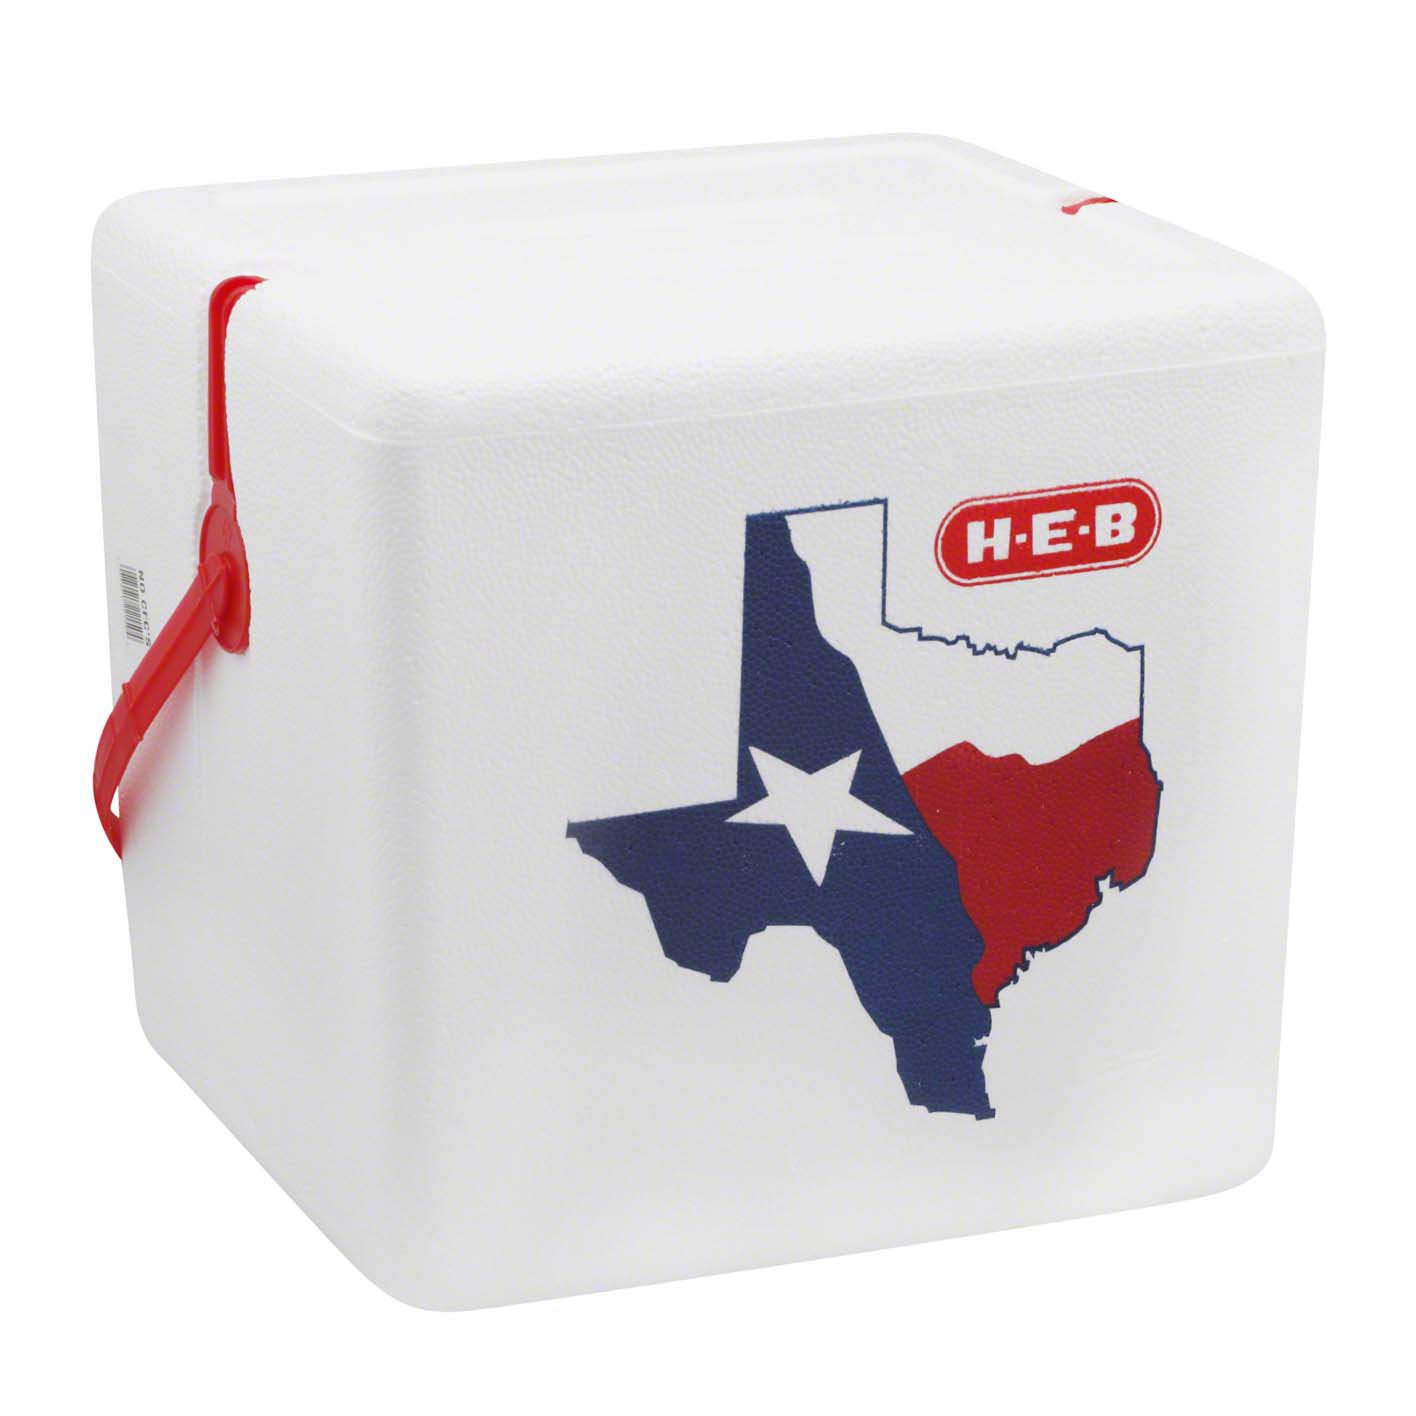 H-E-B Texas Flag Foam Cooler - Shop Coolers & Ice Packs at H-E-B